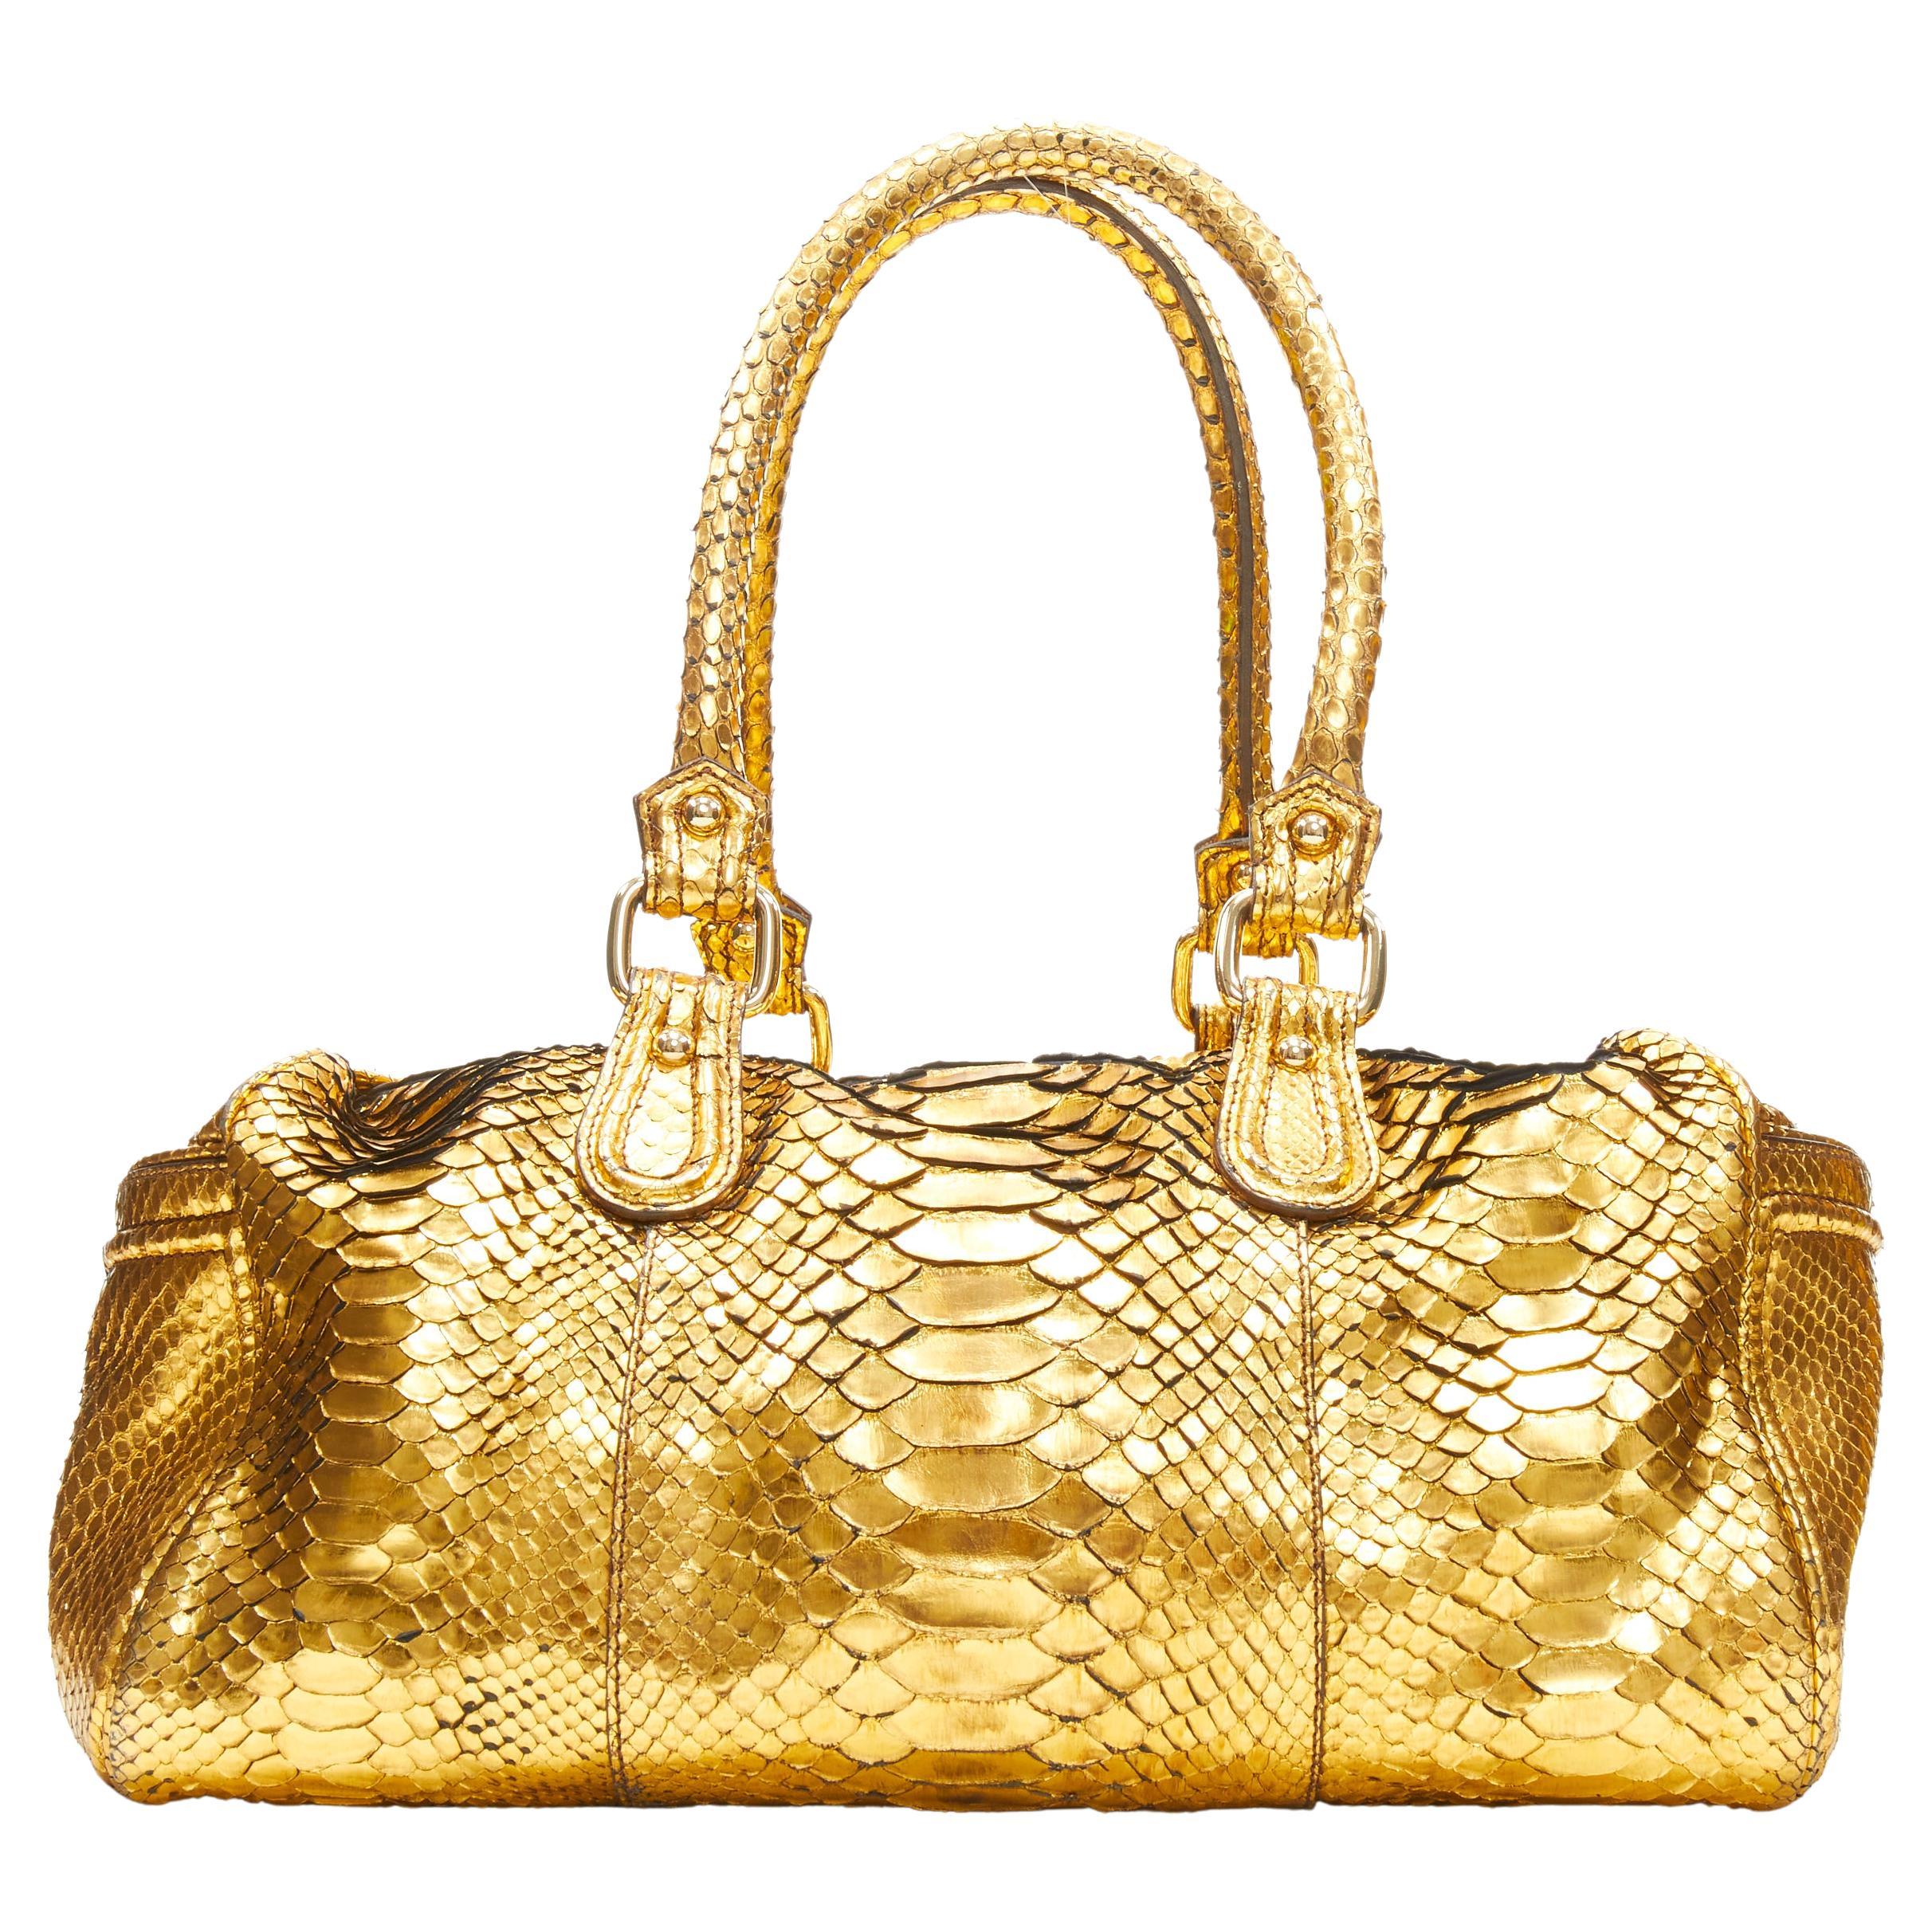 ZAGLIANI Metallic goldfarbene Duffel-Boston-Tasche aus Leder mit Henkel